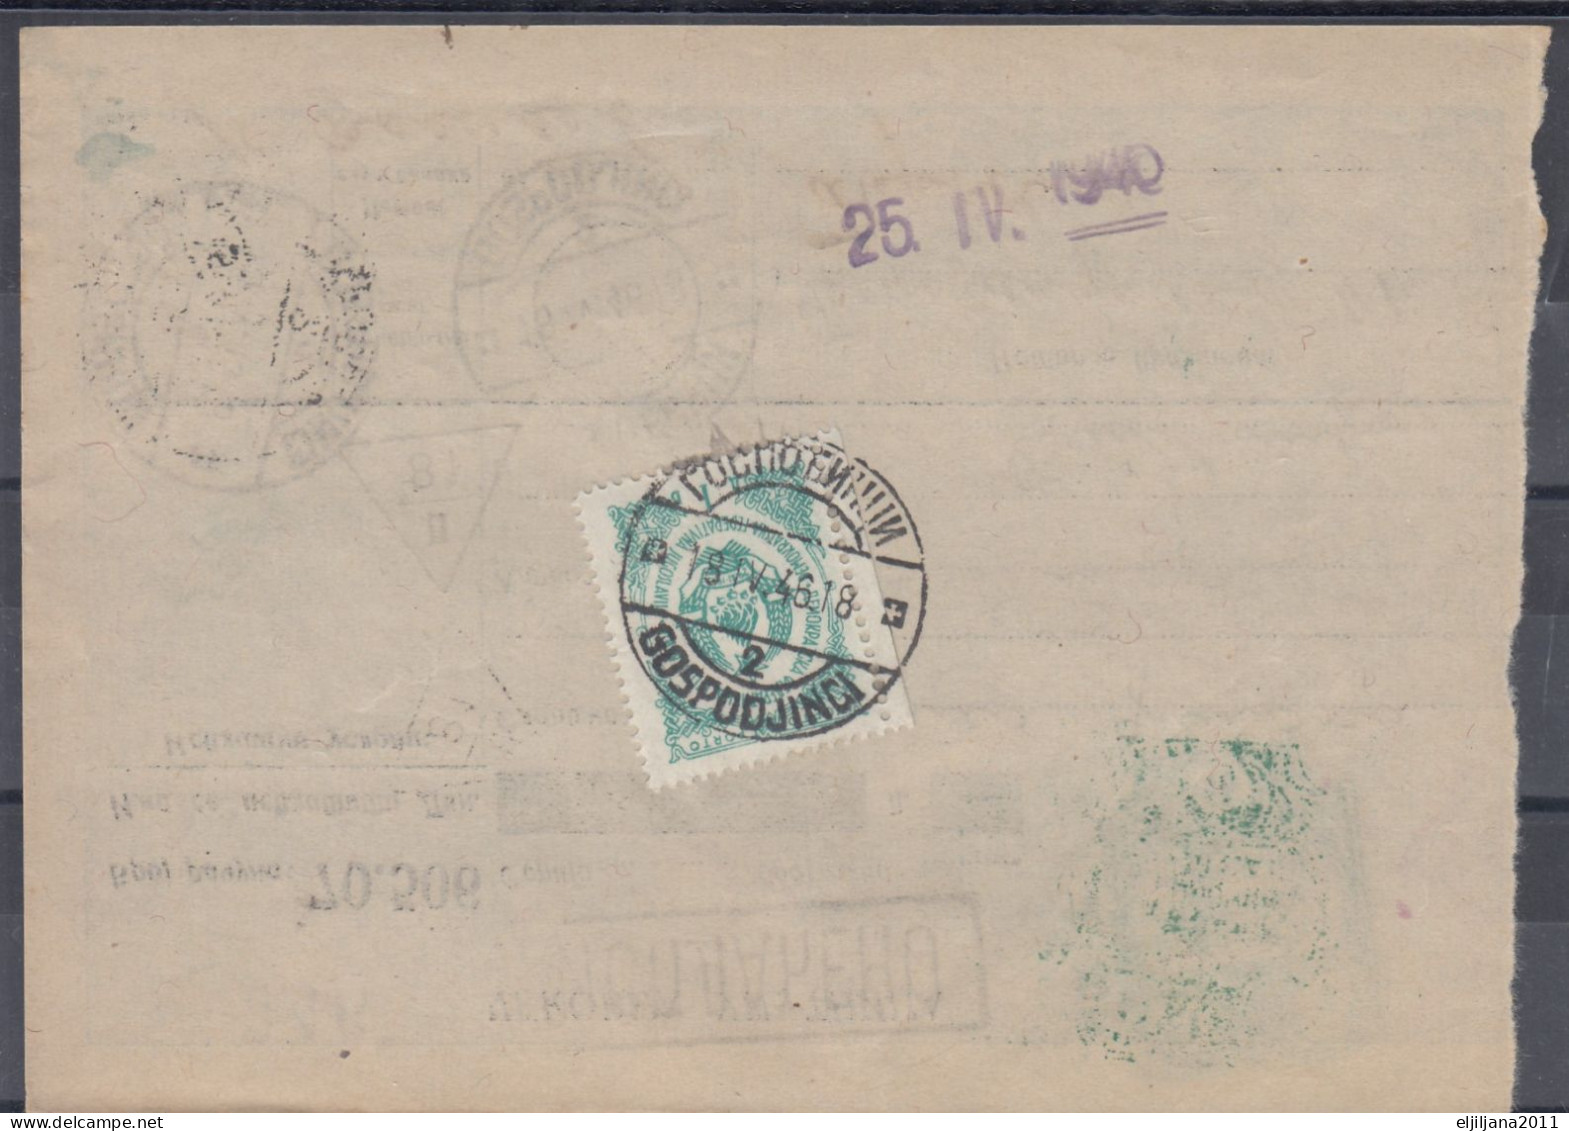 ⁕ Yugoslavia 1946 Serbia / Vojvodina ⁕ Postal Savings Bank Novi Sad - Money Order Receipt - PORTO Official ⁕ GOSPODJINCI - Impuestos